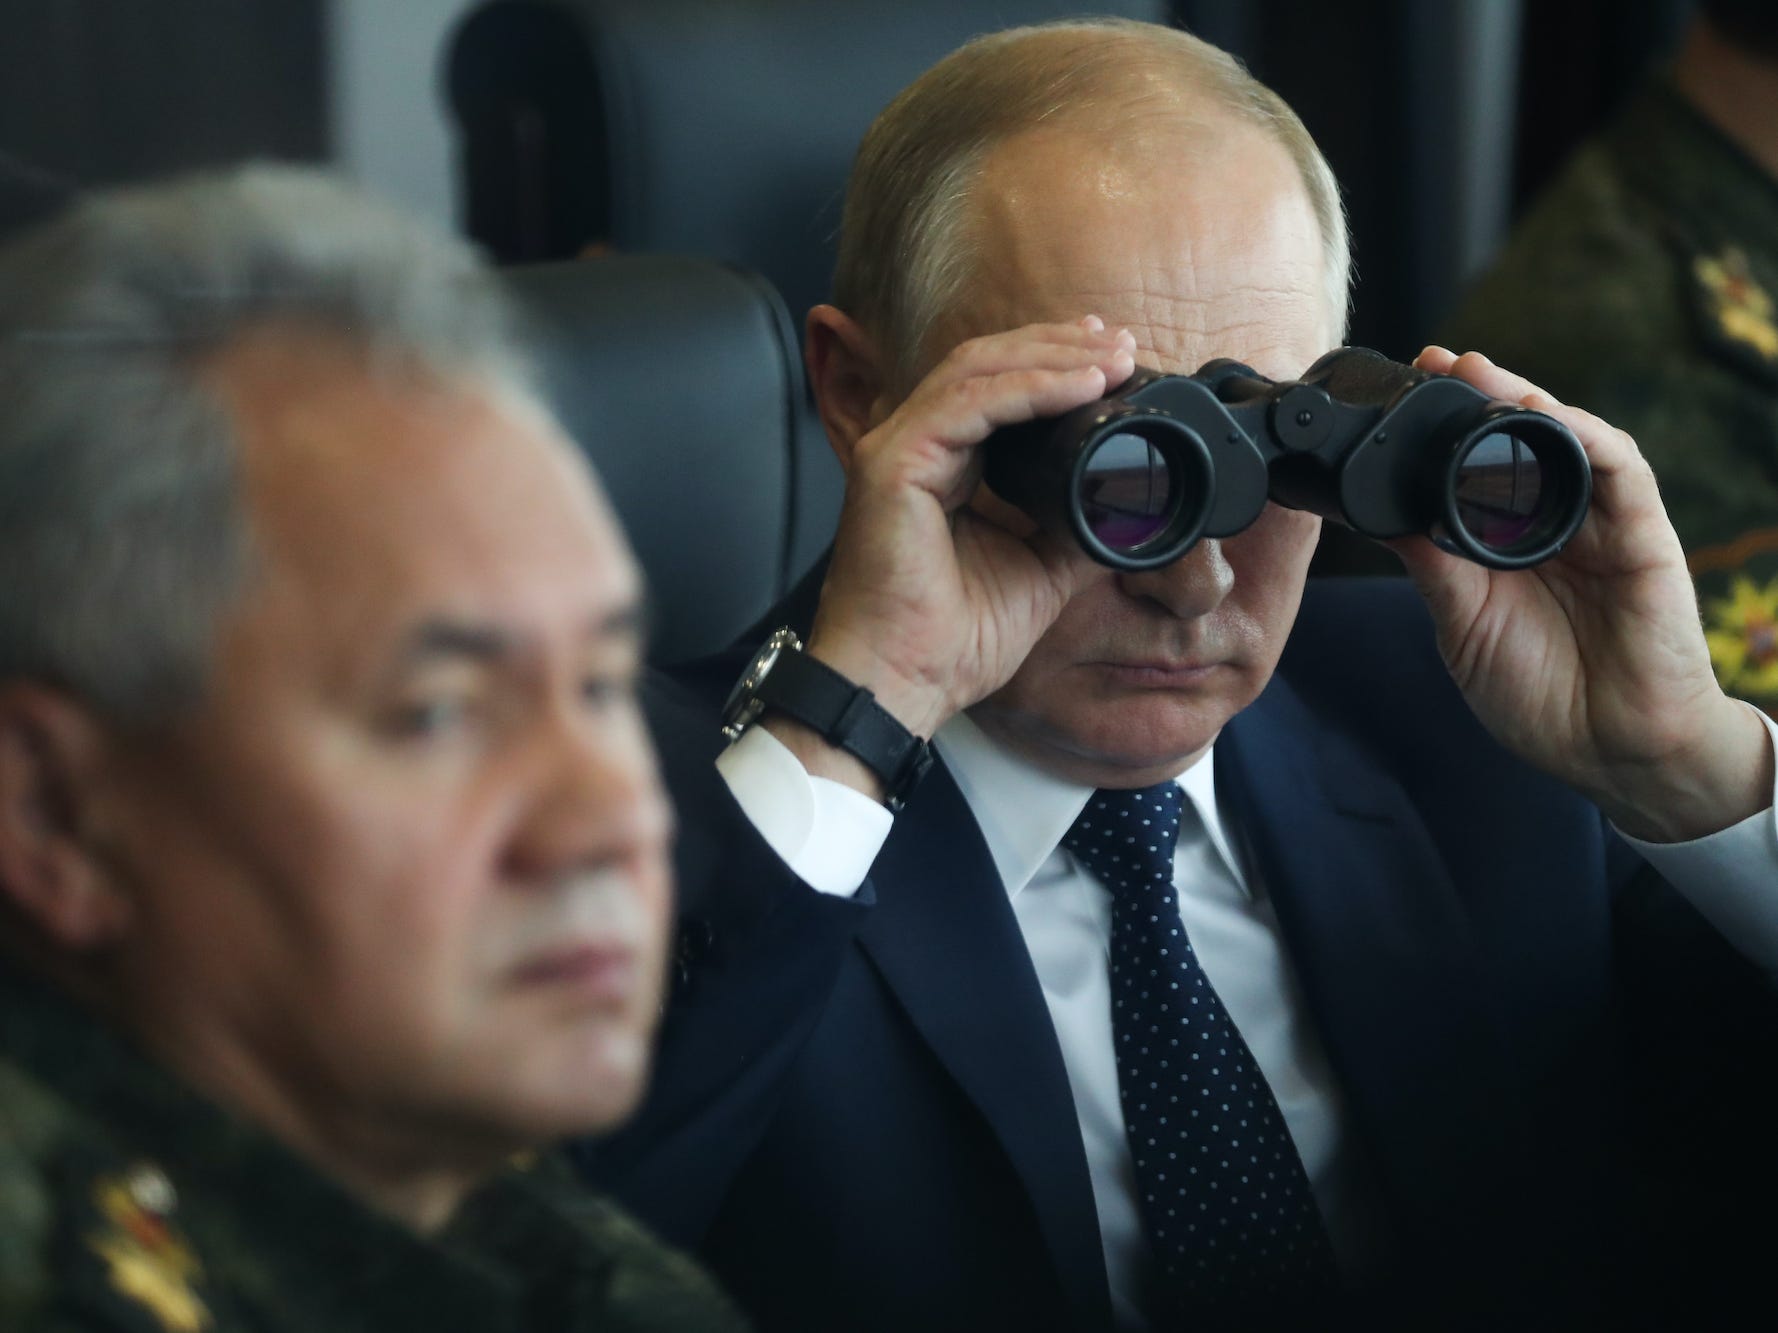 Putin observes the Zapad 2021 military exercises through binoculars.